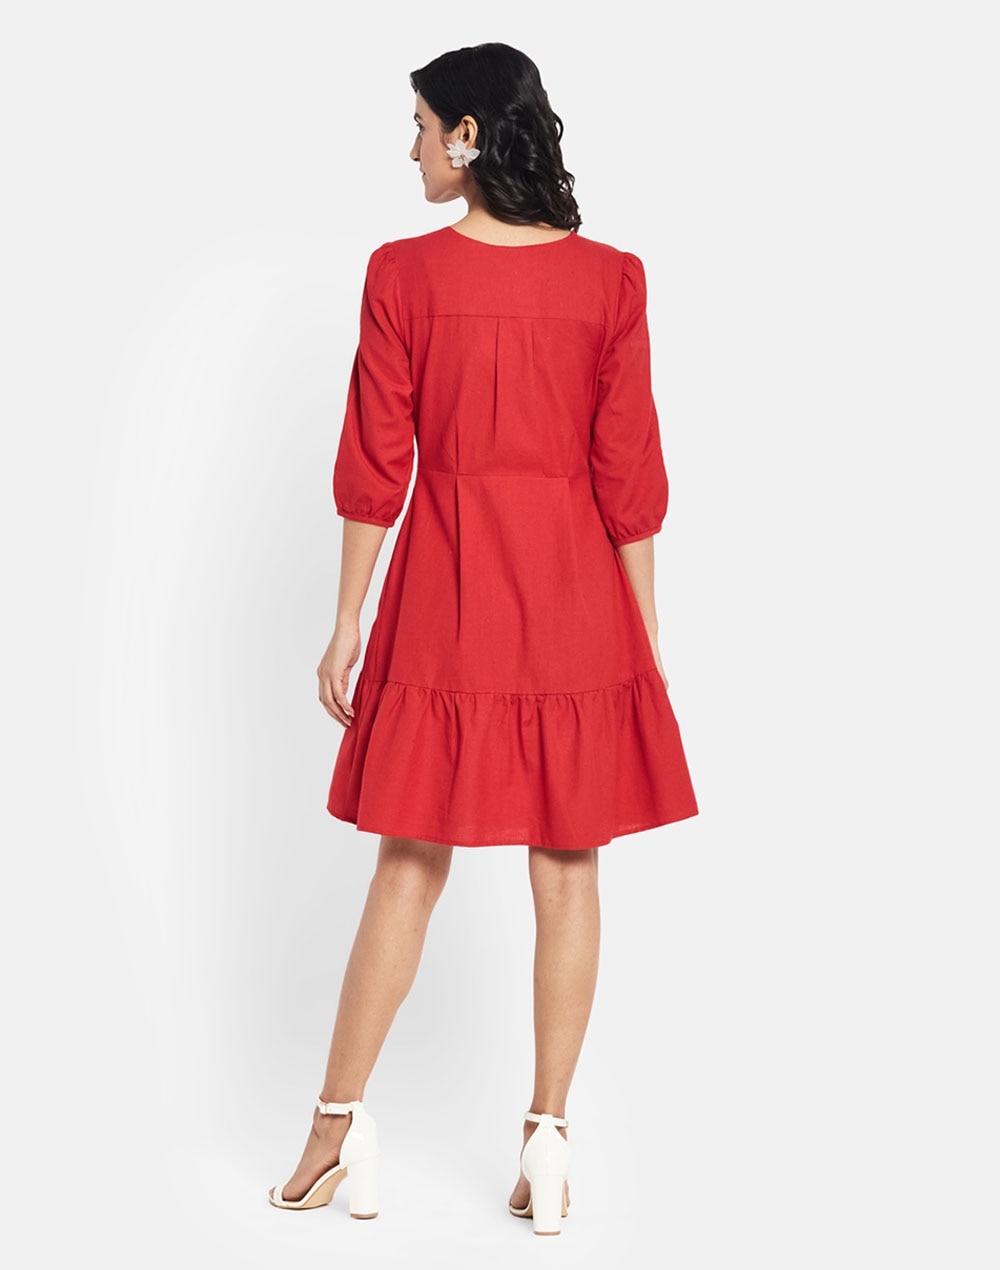 FabNu Red Cotton Linen Knee Length Midi Dress